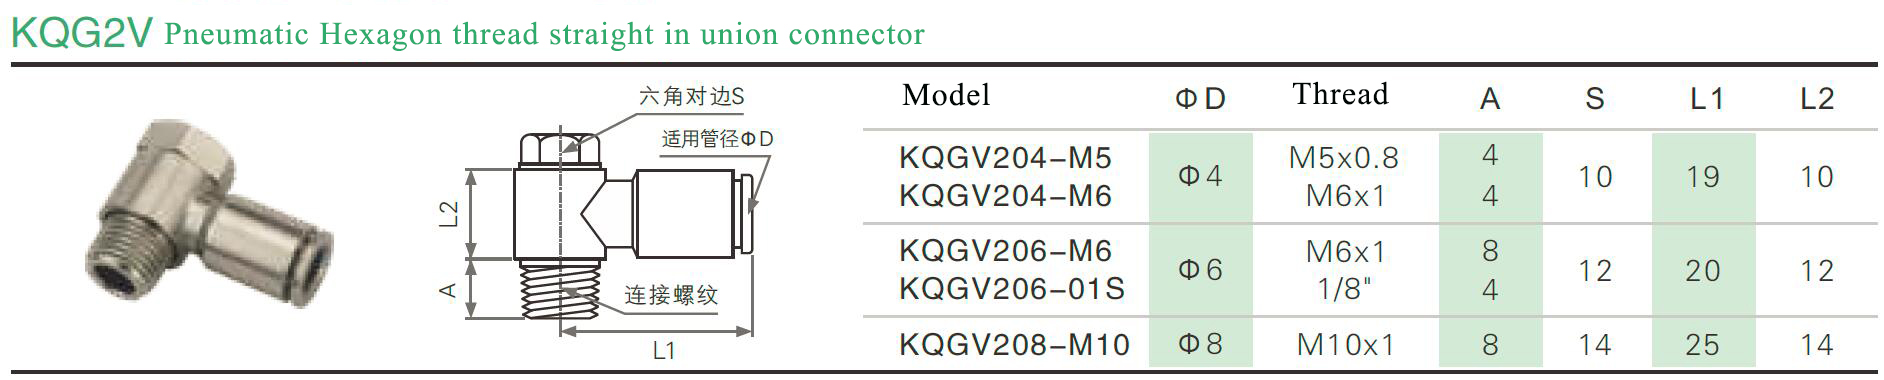 KQG2V stainless steel pneumatic Hexagon thread straight in connector 1.jpg